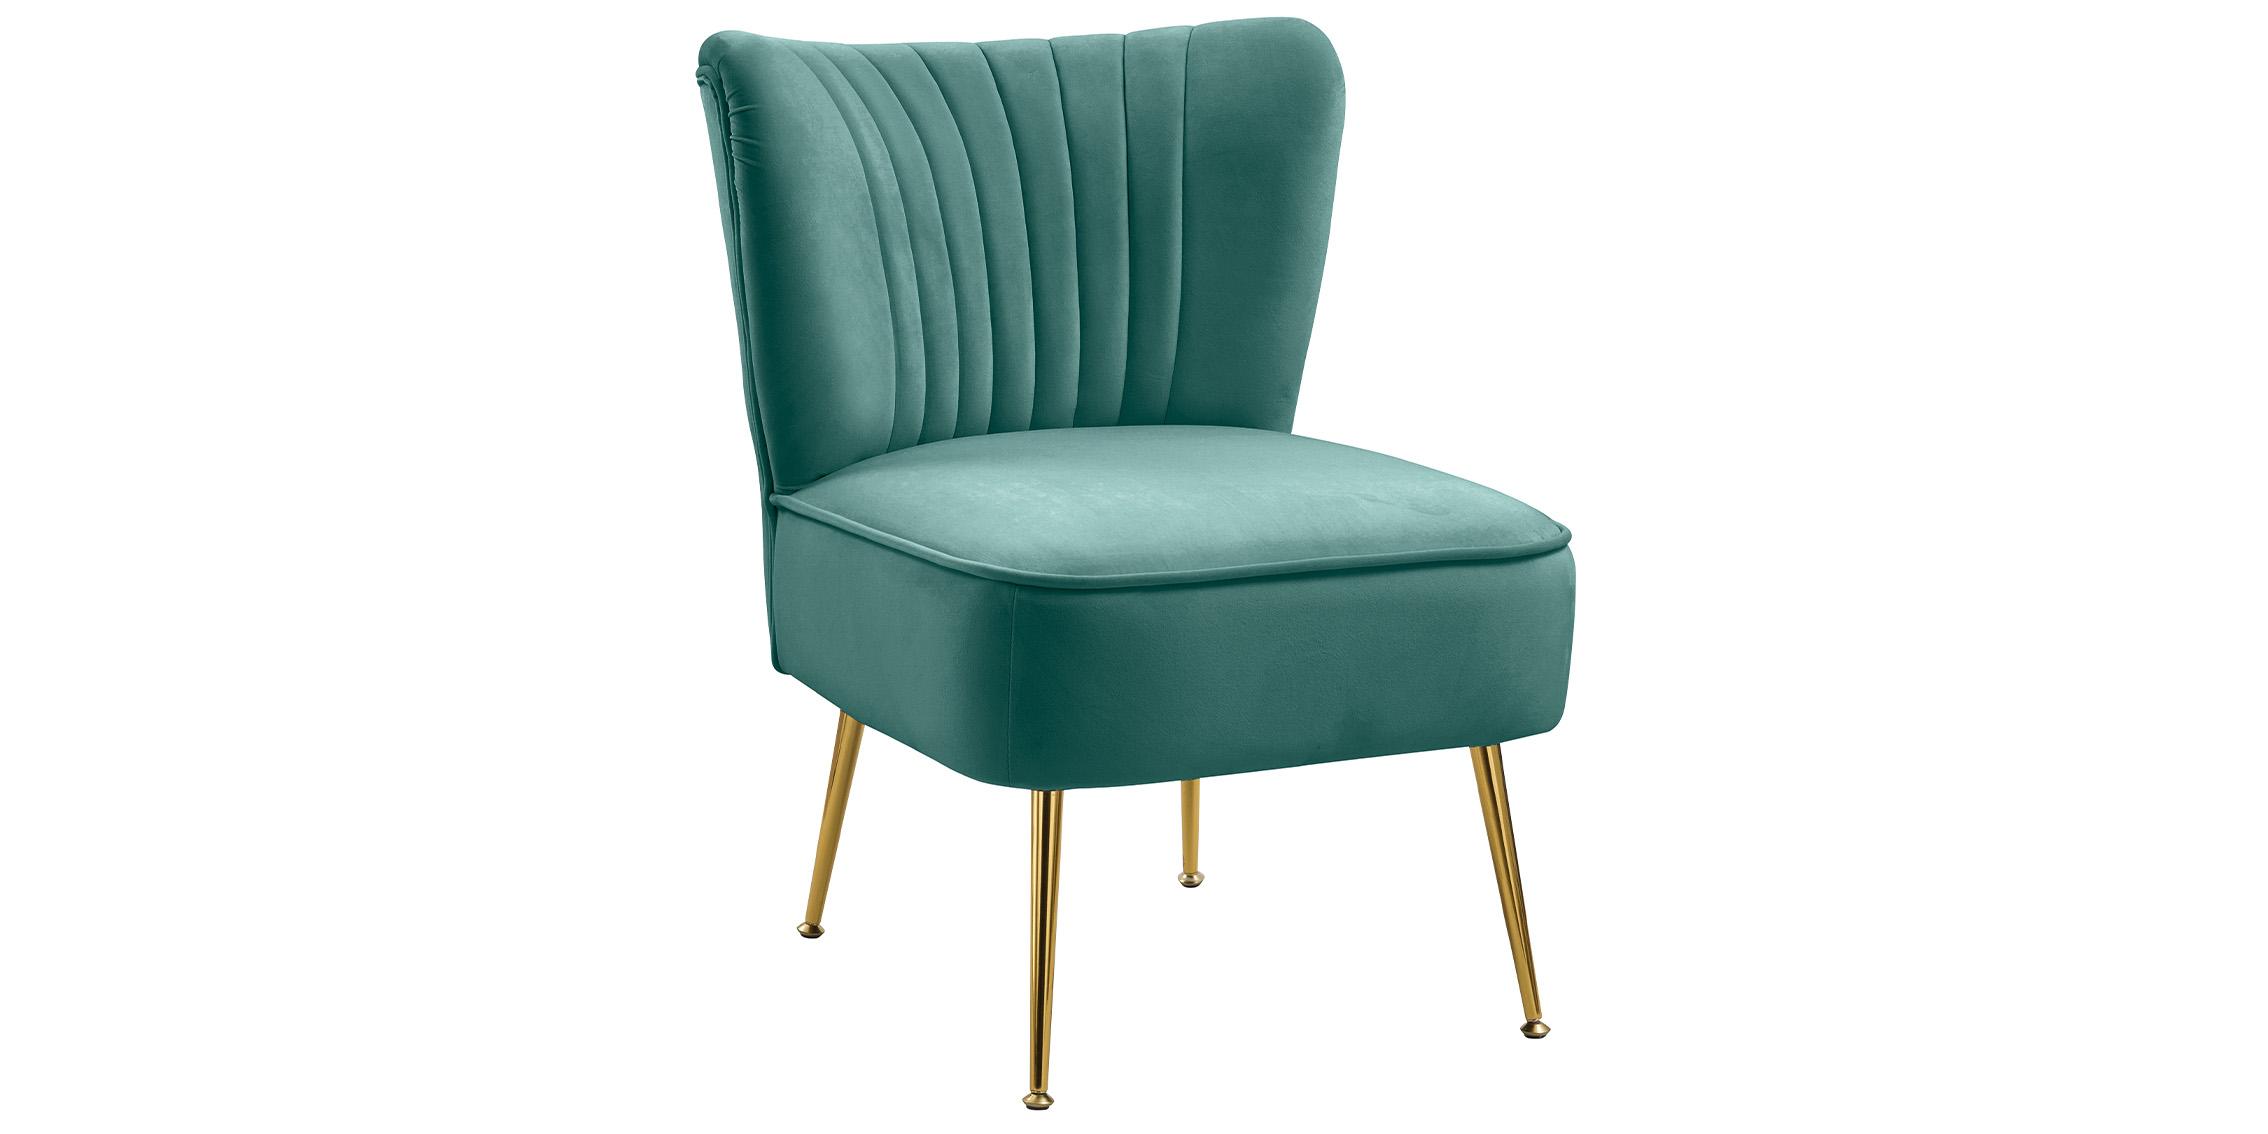 Contemporary, Modern Accent Chair TESS 504Mint 504Mint in Mint Velvet